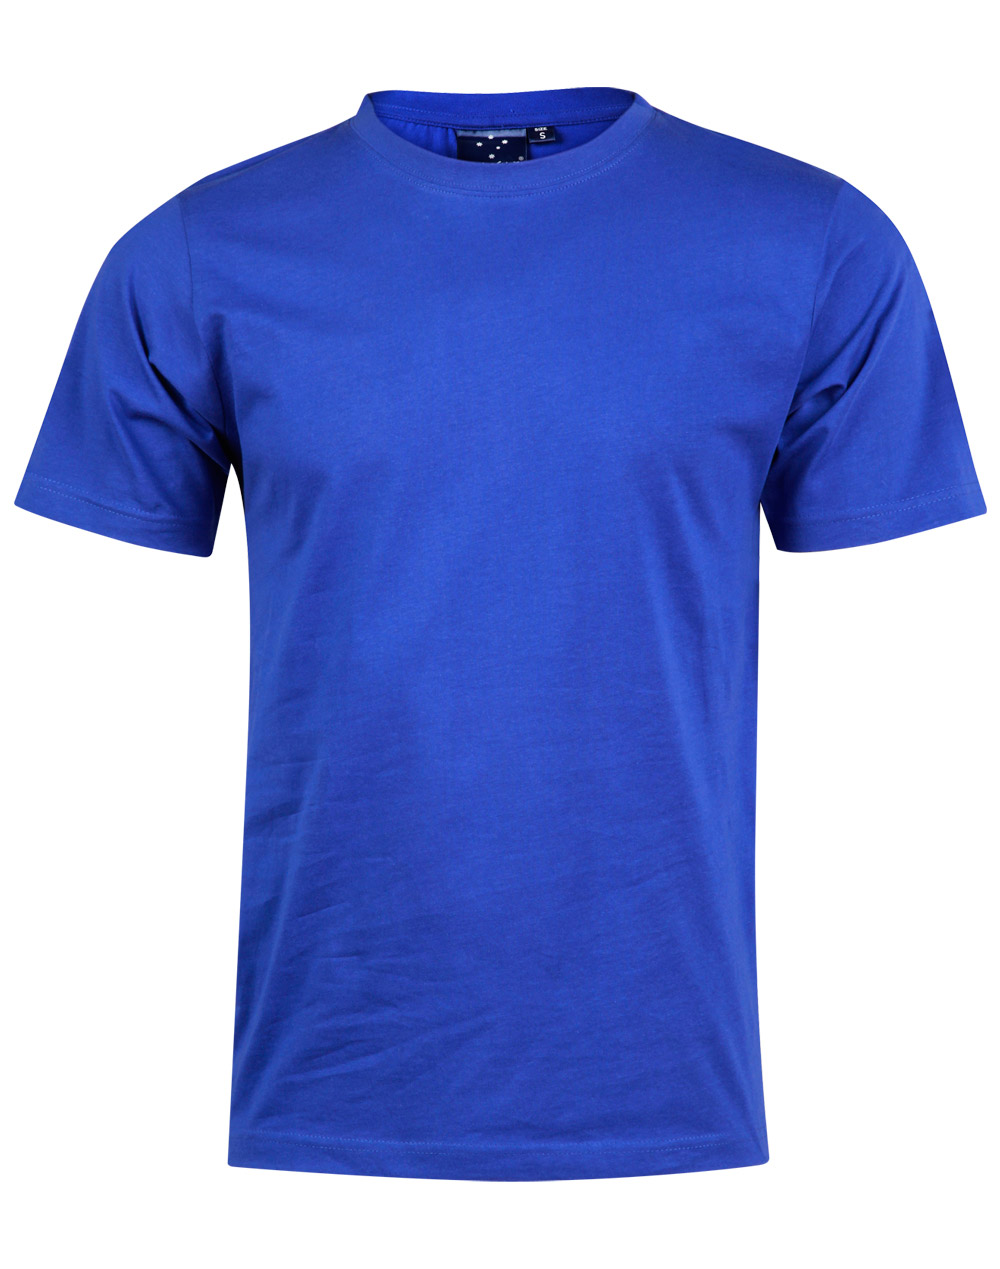 Custom (Bottle) Semi-Fitted T-Shirts Men's Online in Perh Australia